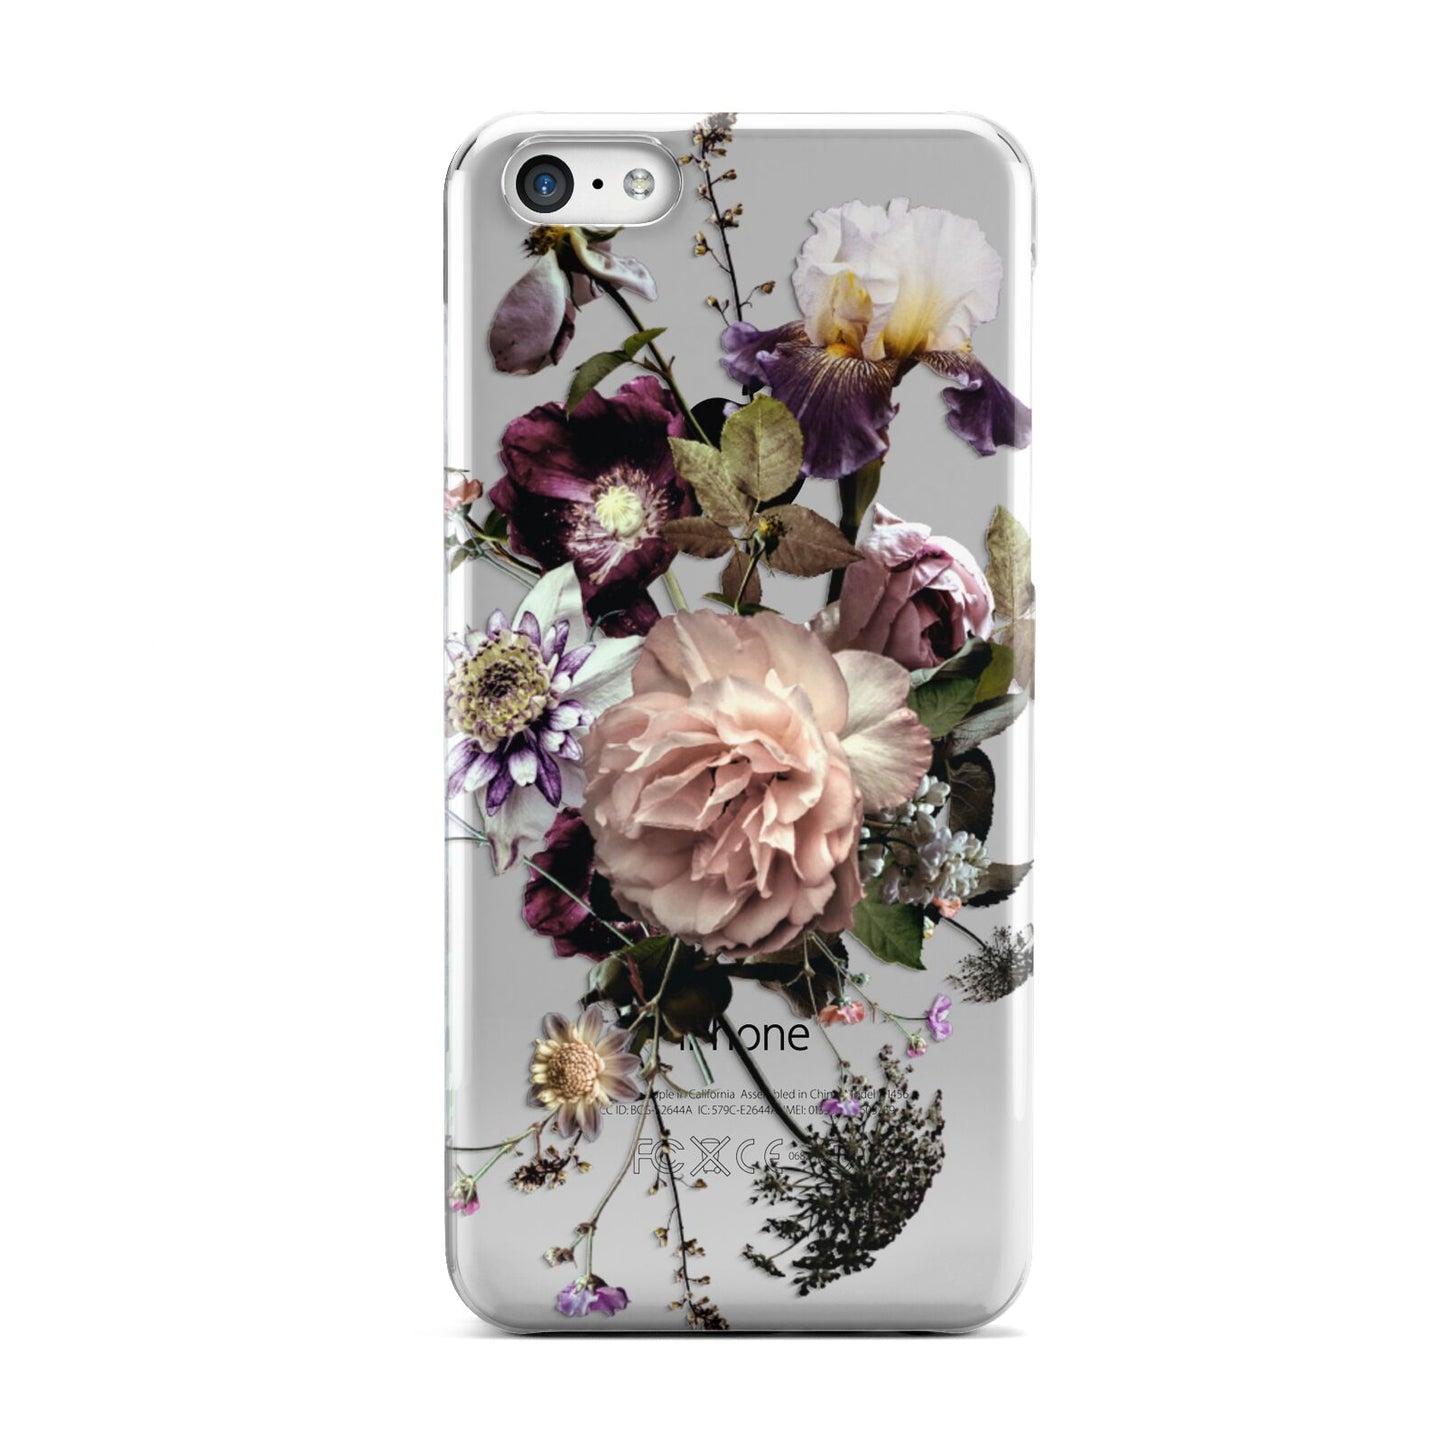 Vintage Flowers Apple iPhone 5c Case